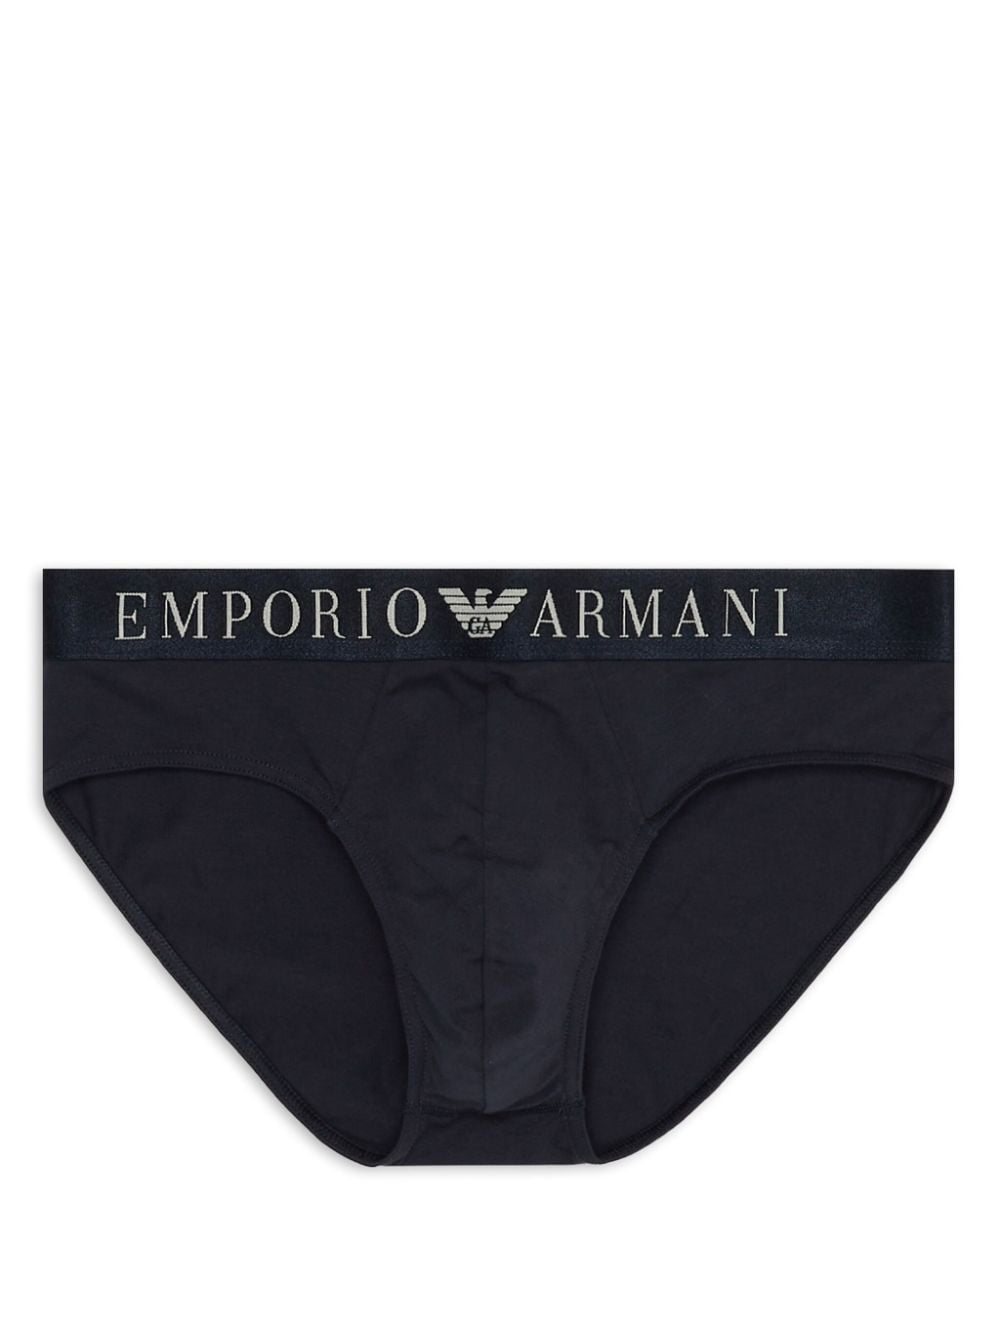 Image 1 of Emporio Armani logo-waistband cotton briefs